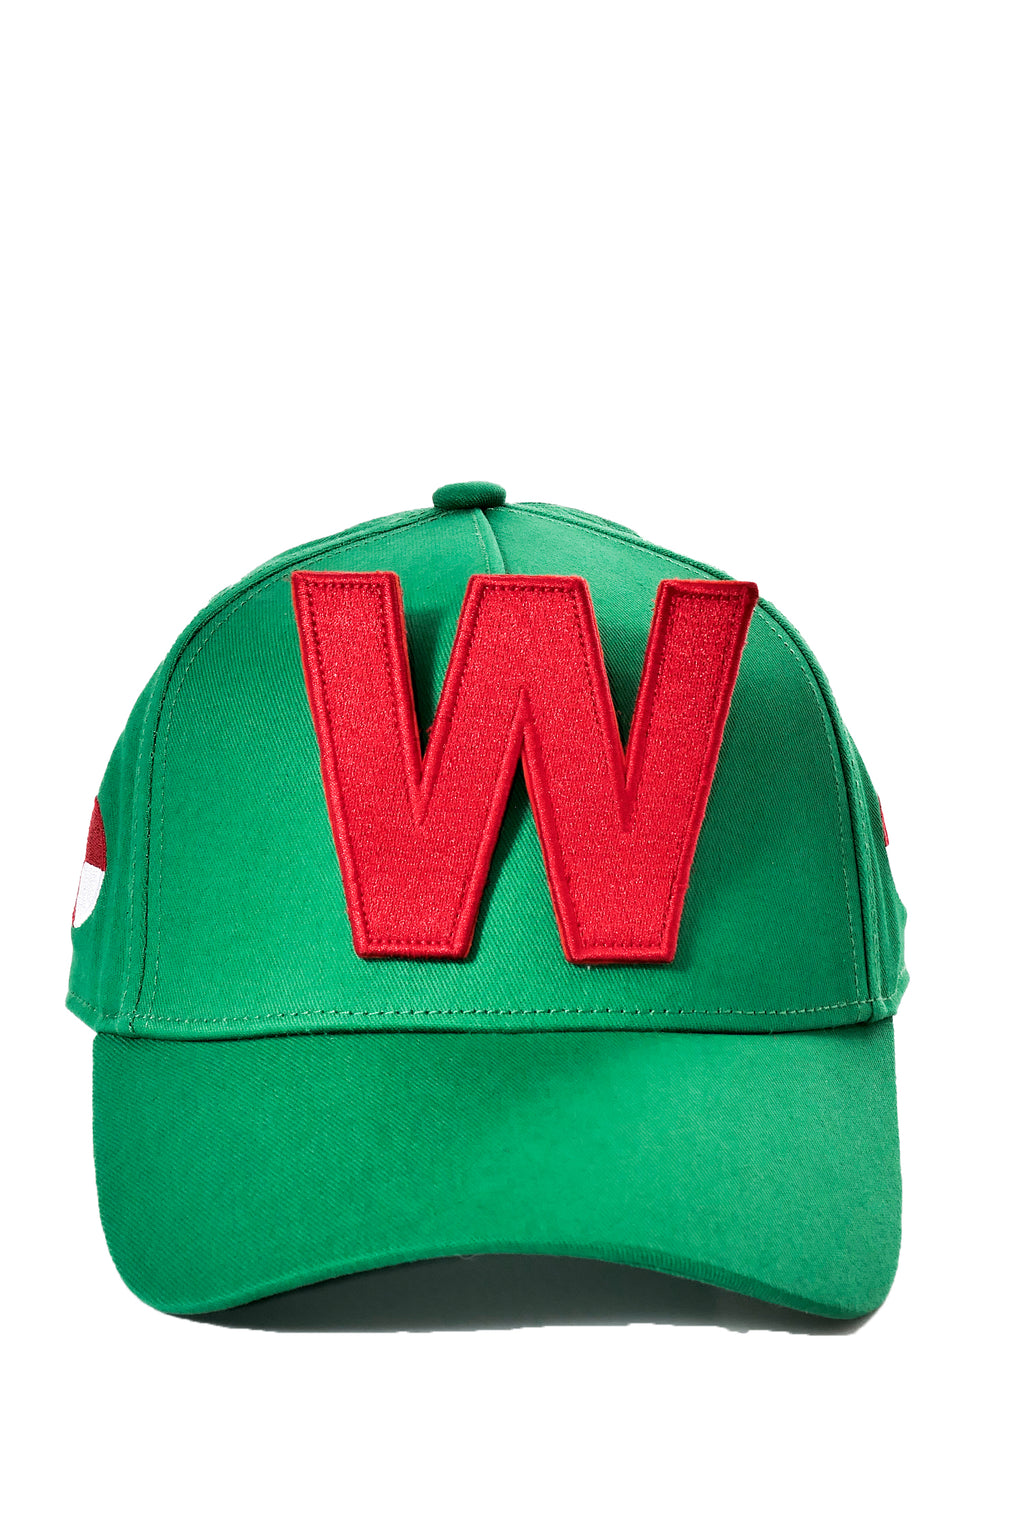 W-Cap - Fern Green